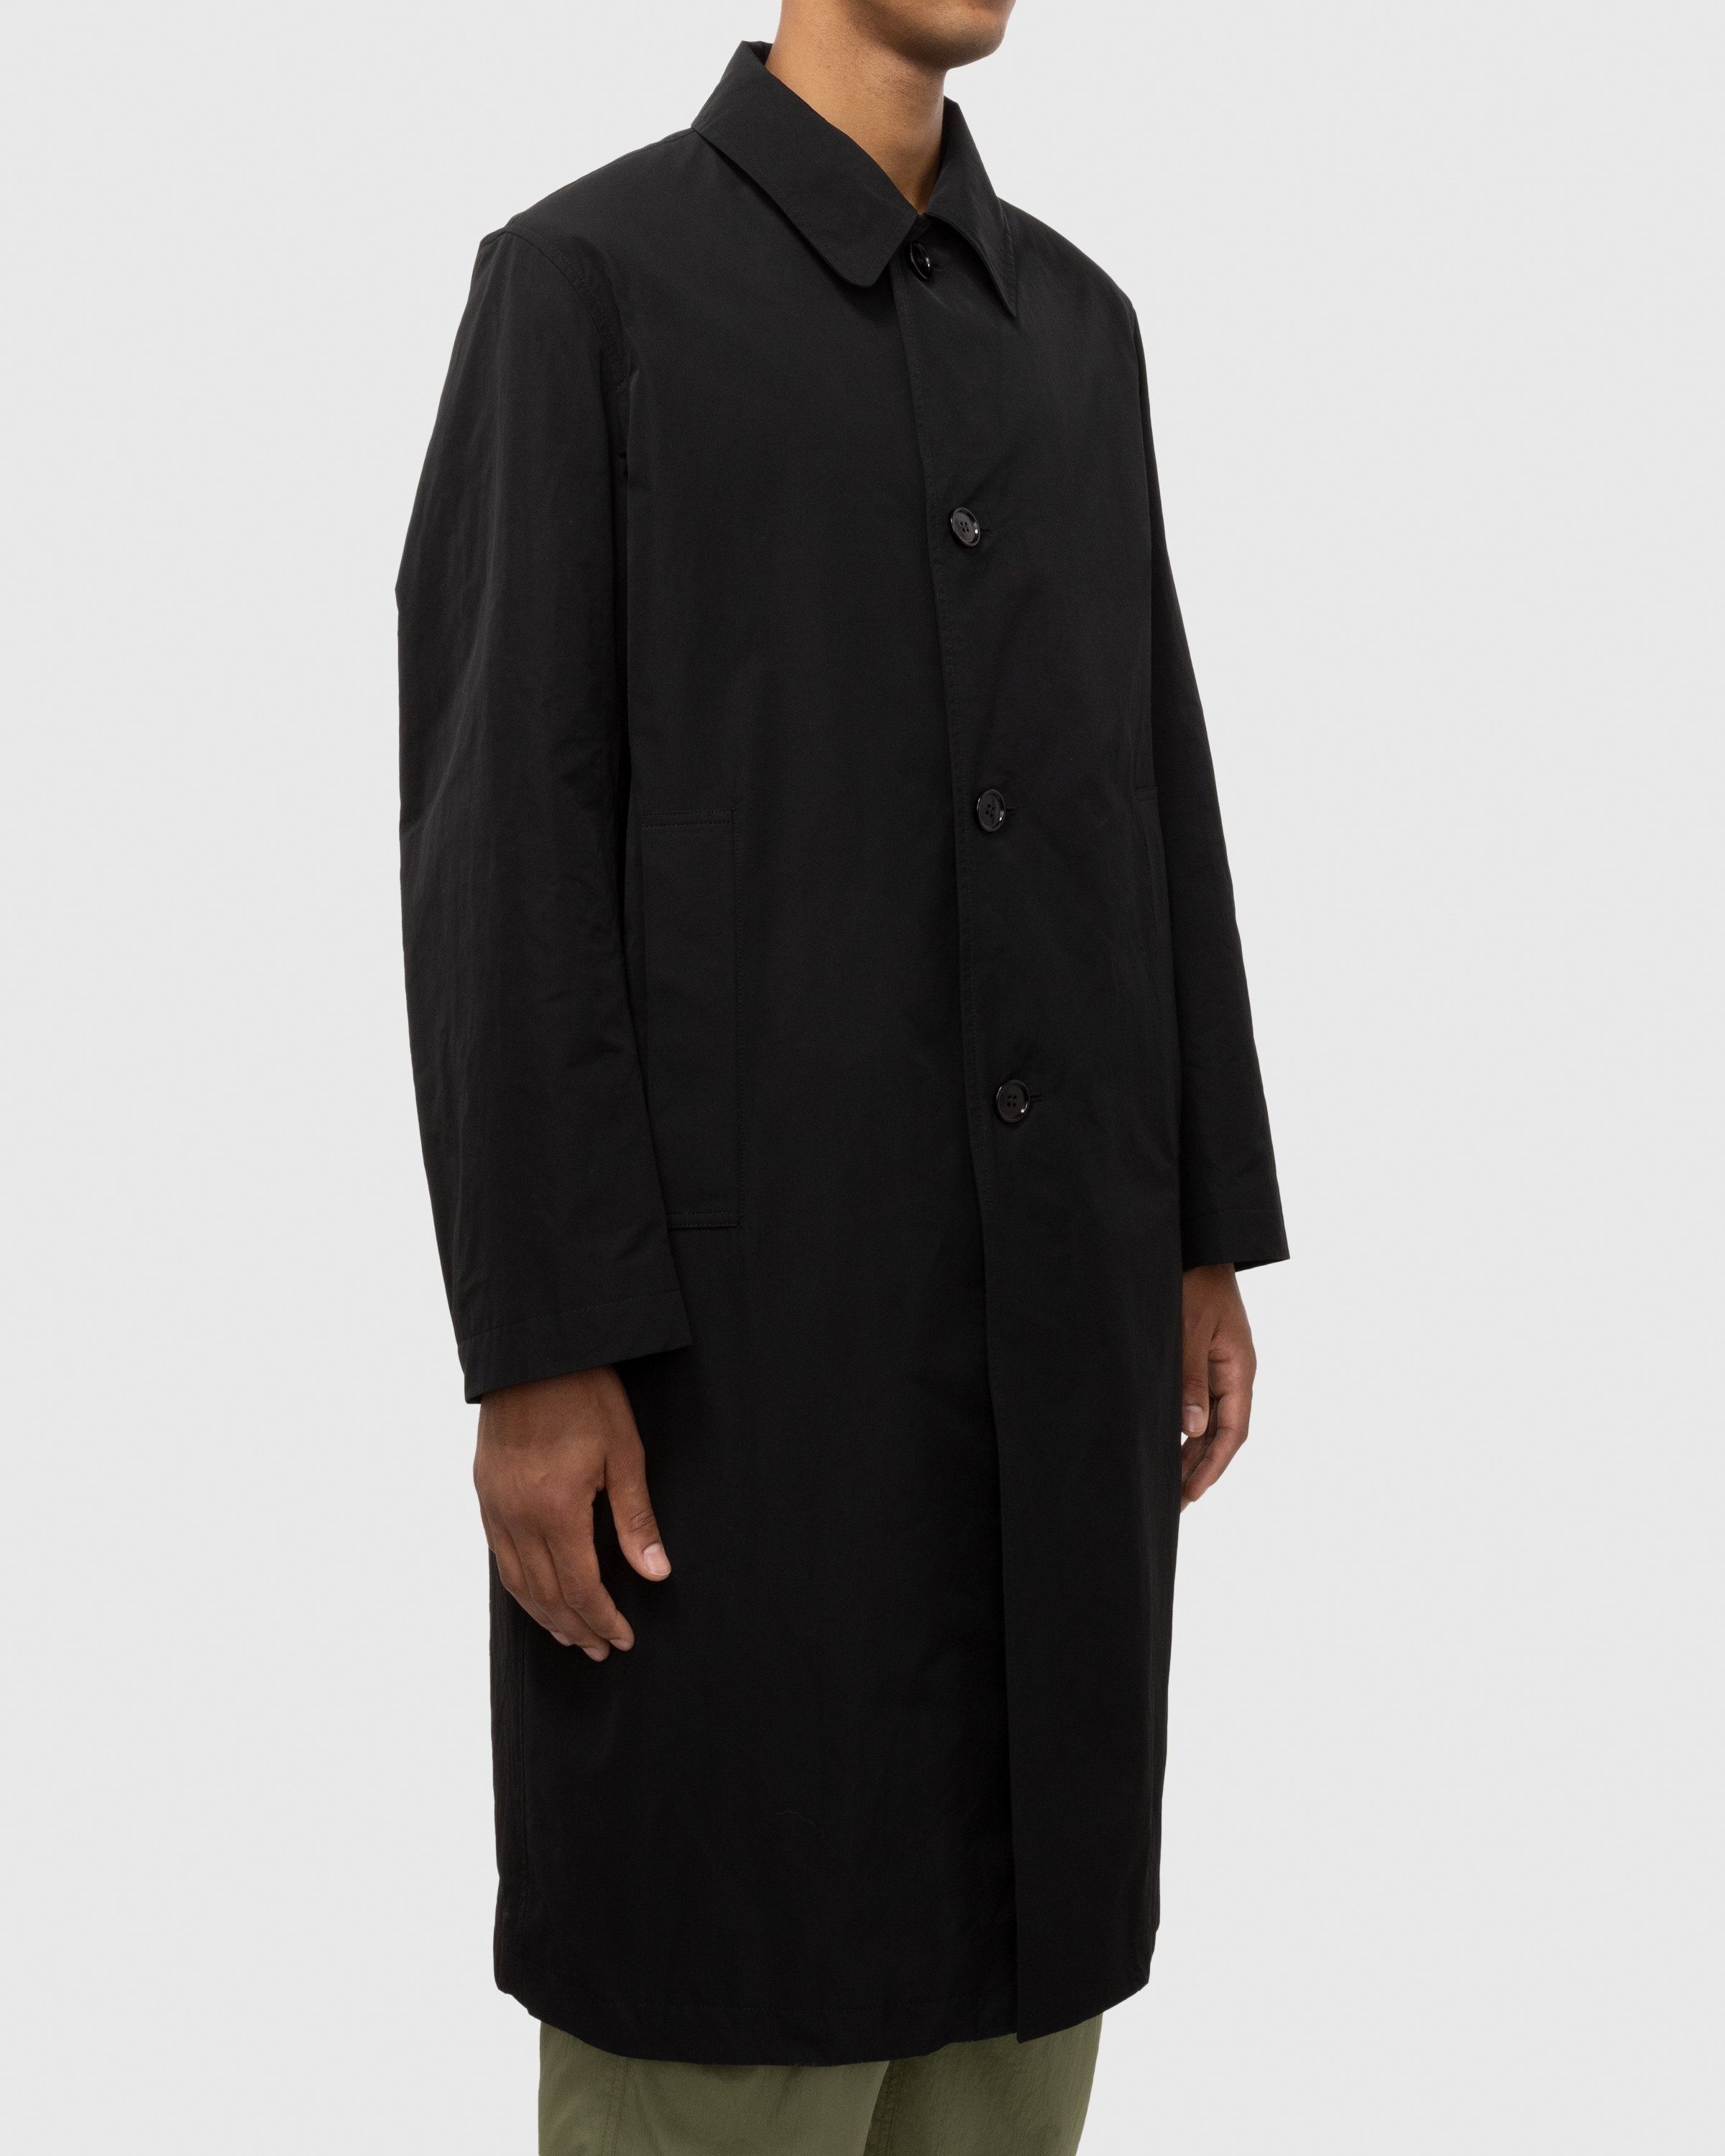 Dries van Noten – Rankle Coat Black - Outerwear - Black - Image 2